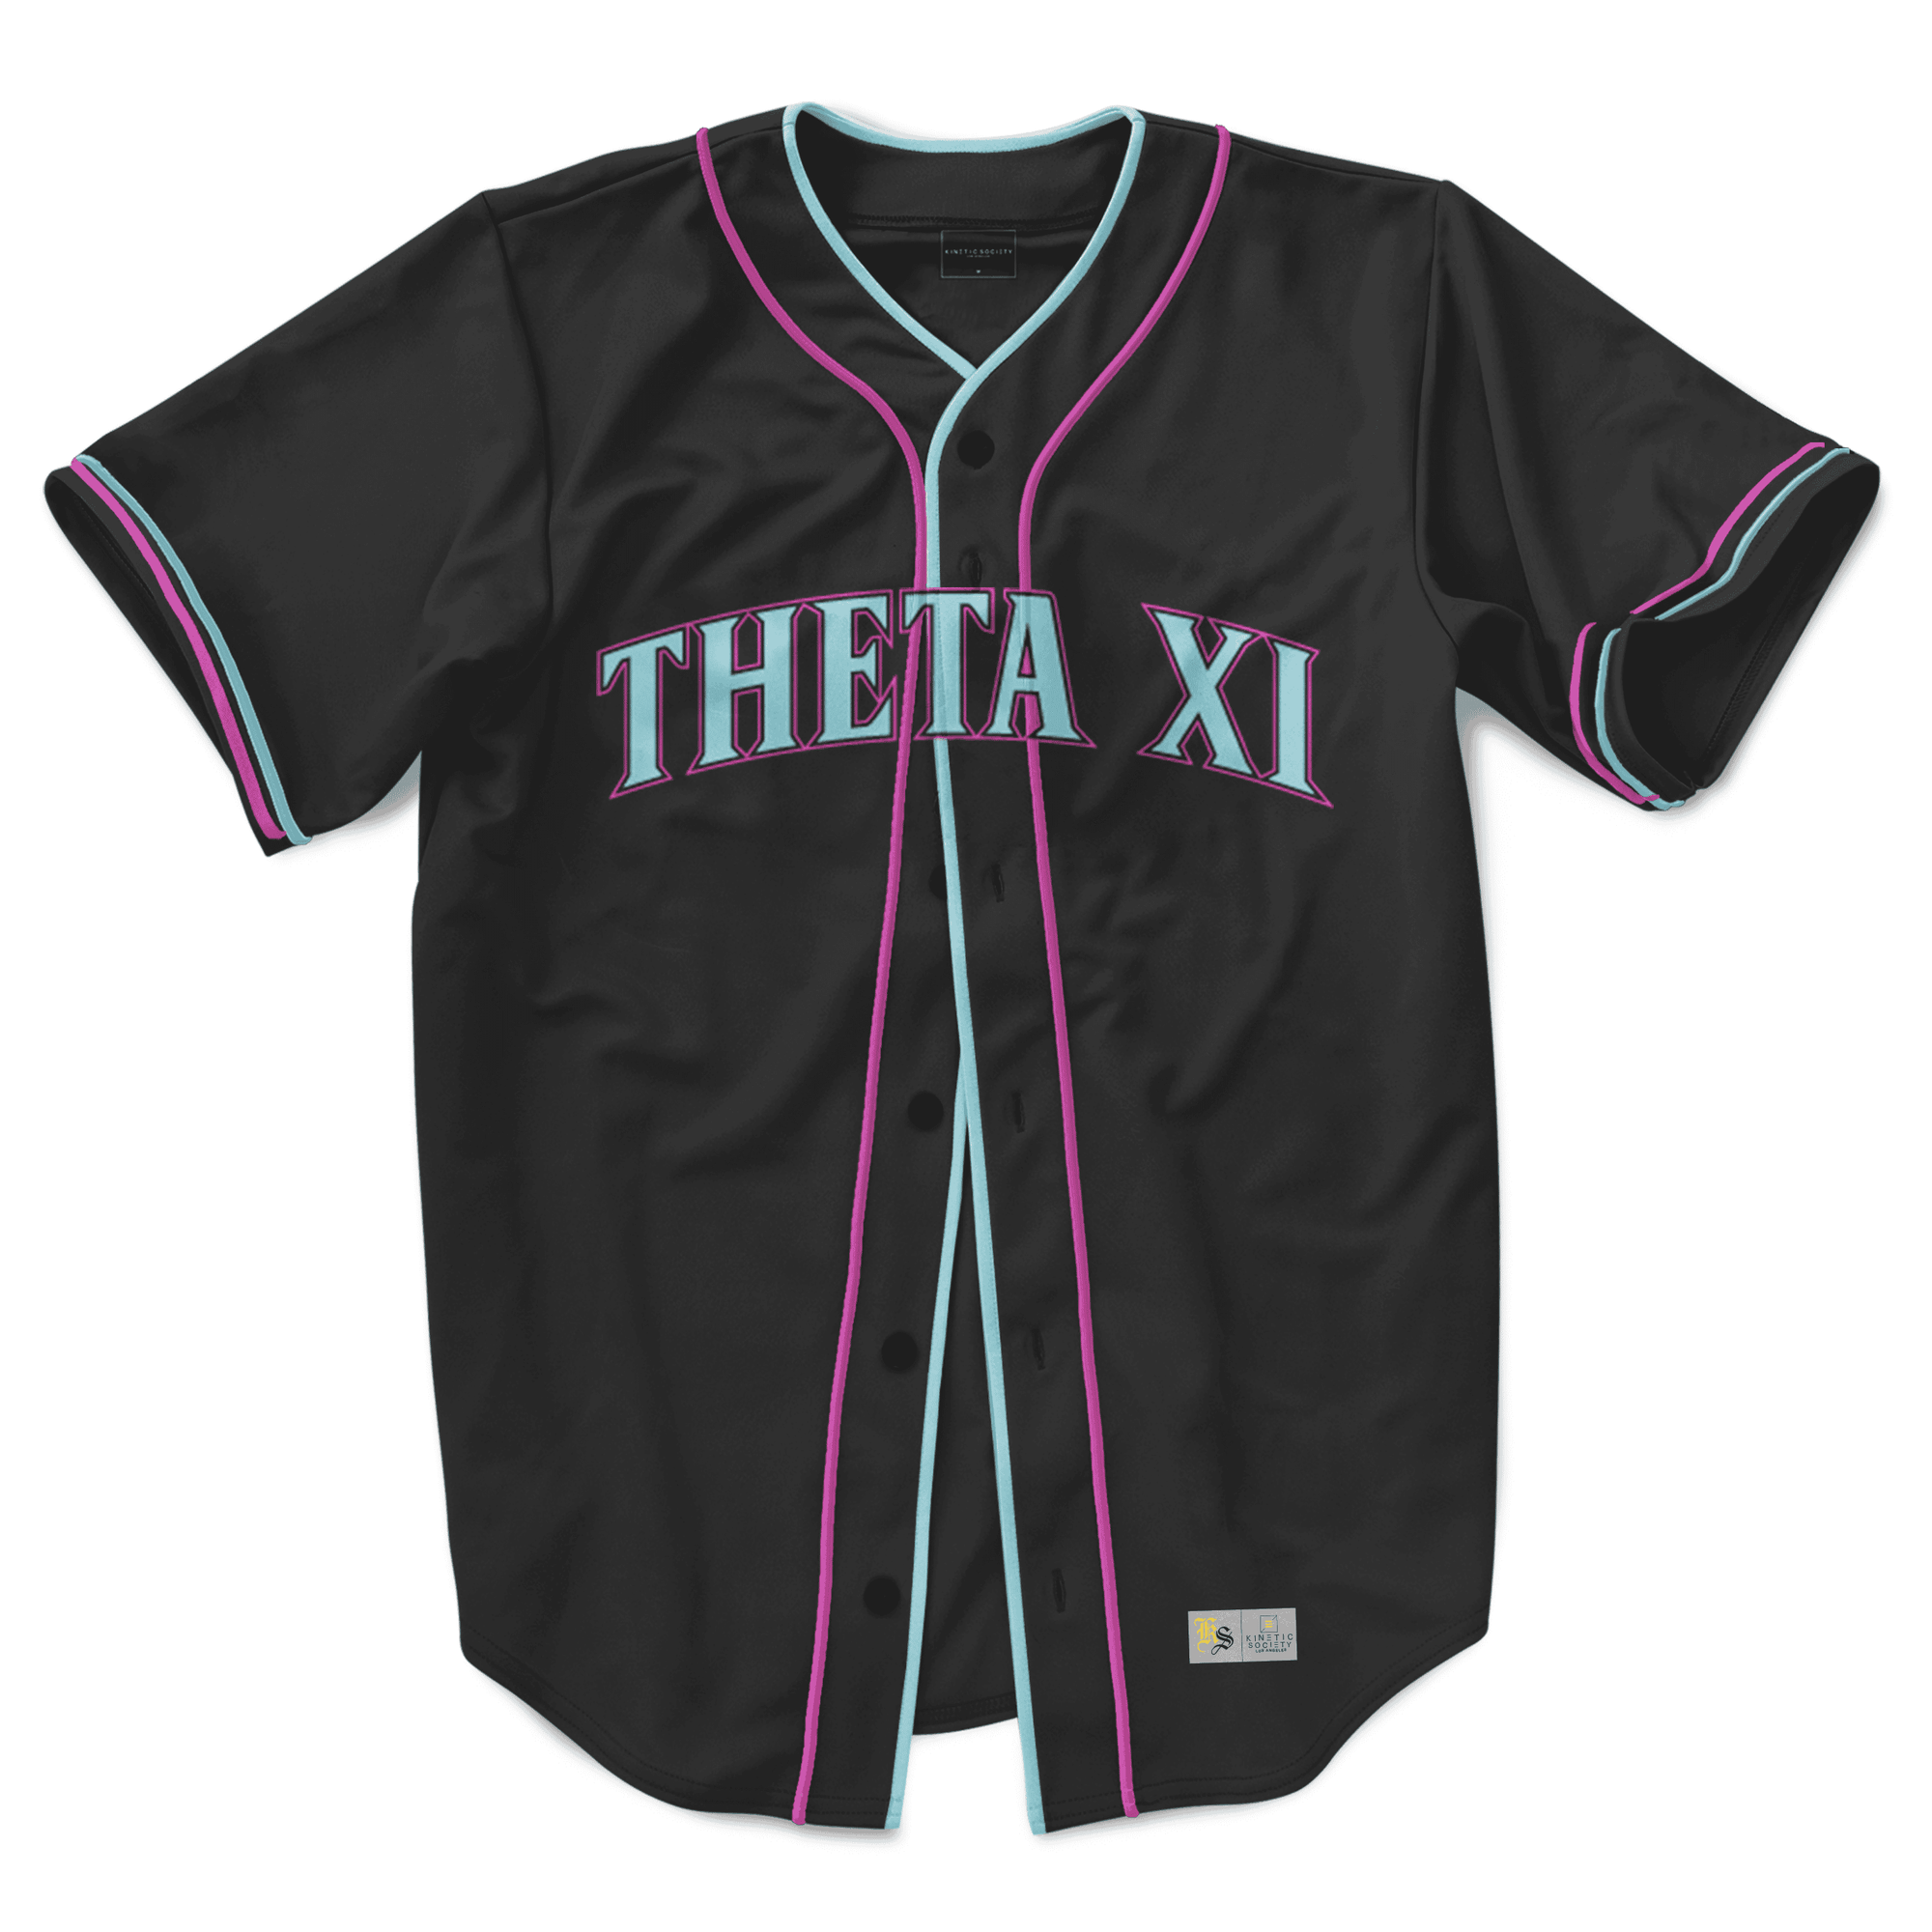 Theta Xi - Neo Nightlife Baseball Jersey